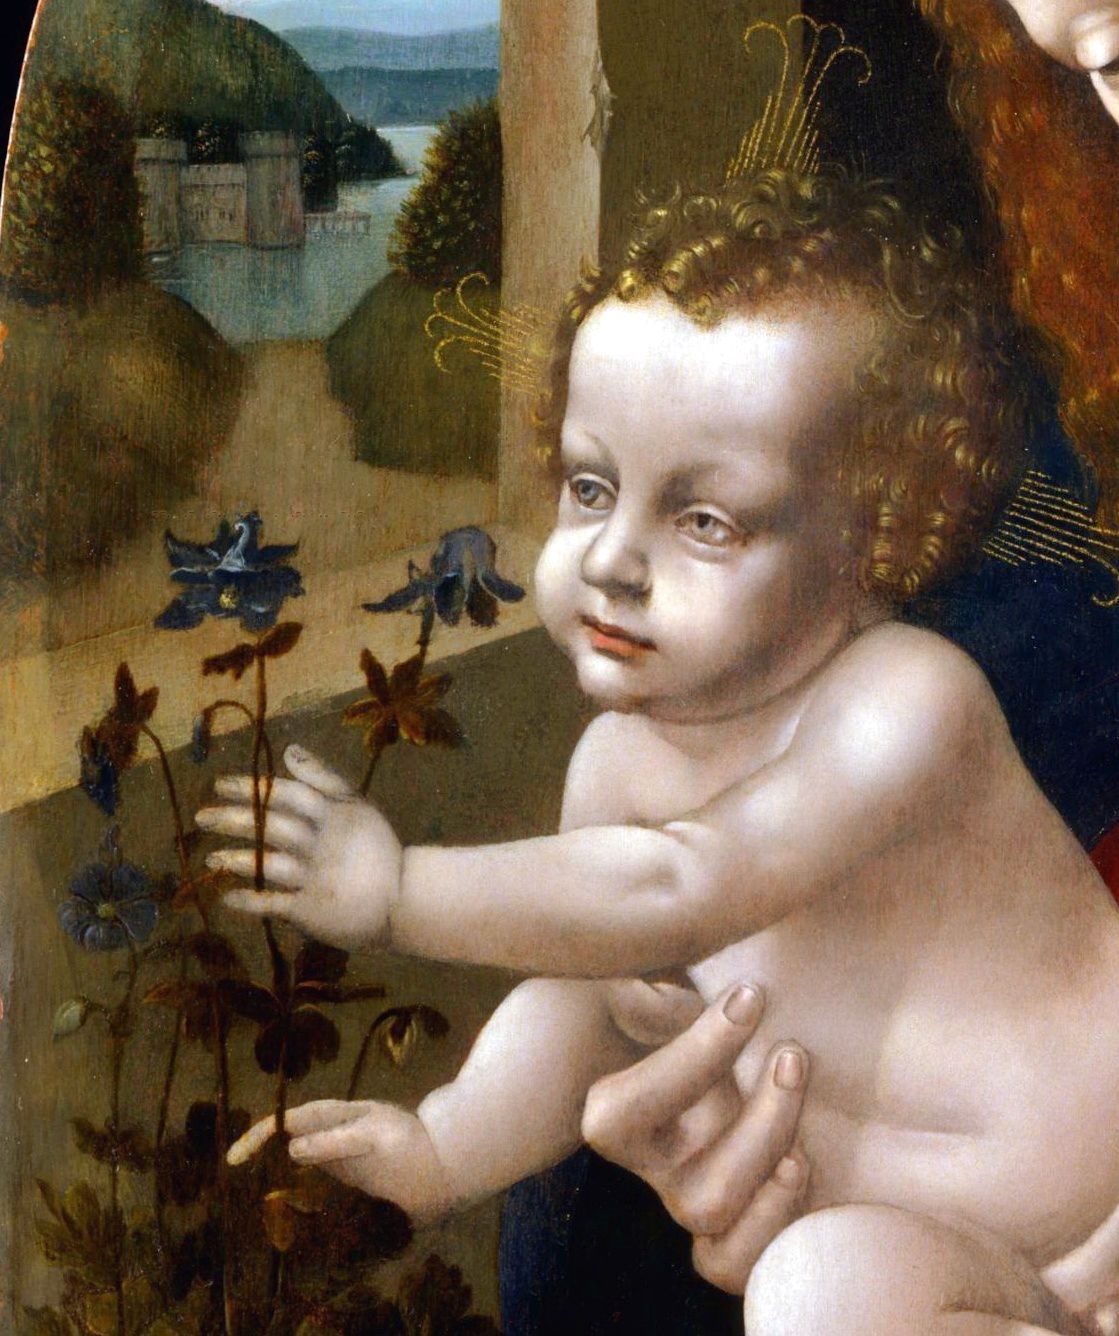 Leonardo+da+Vinci-1452-1519 (938).jpg